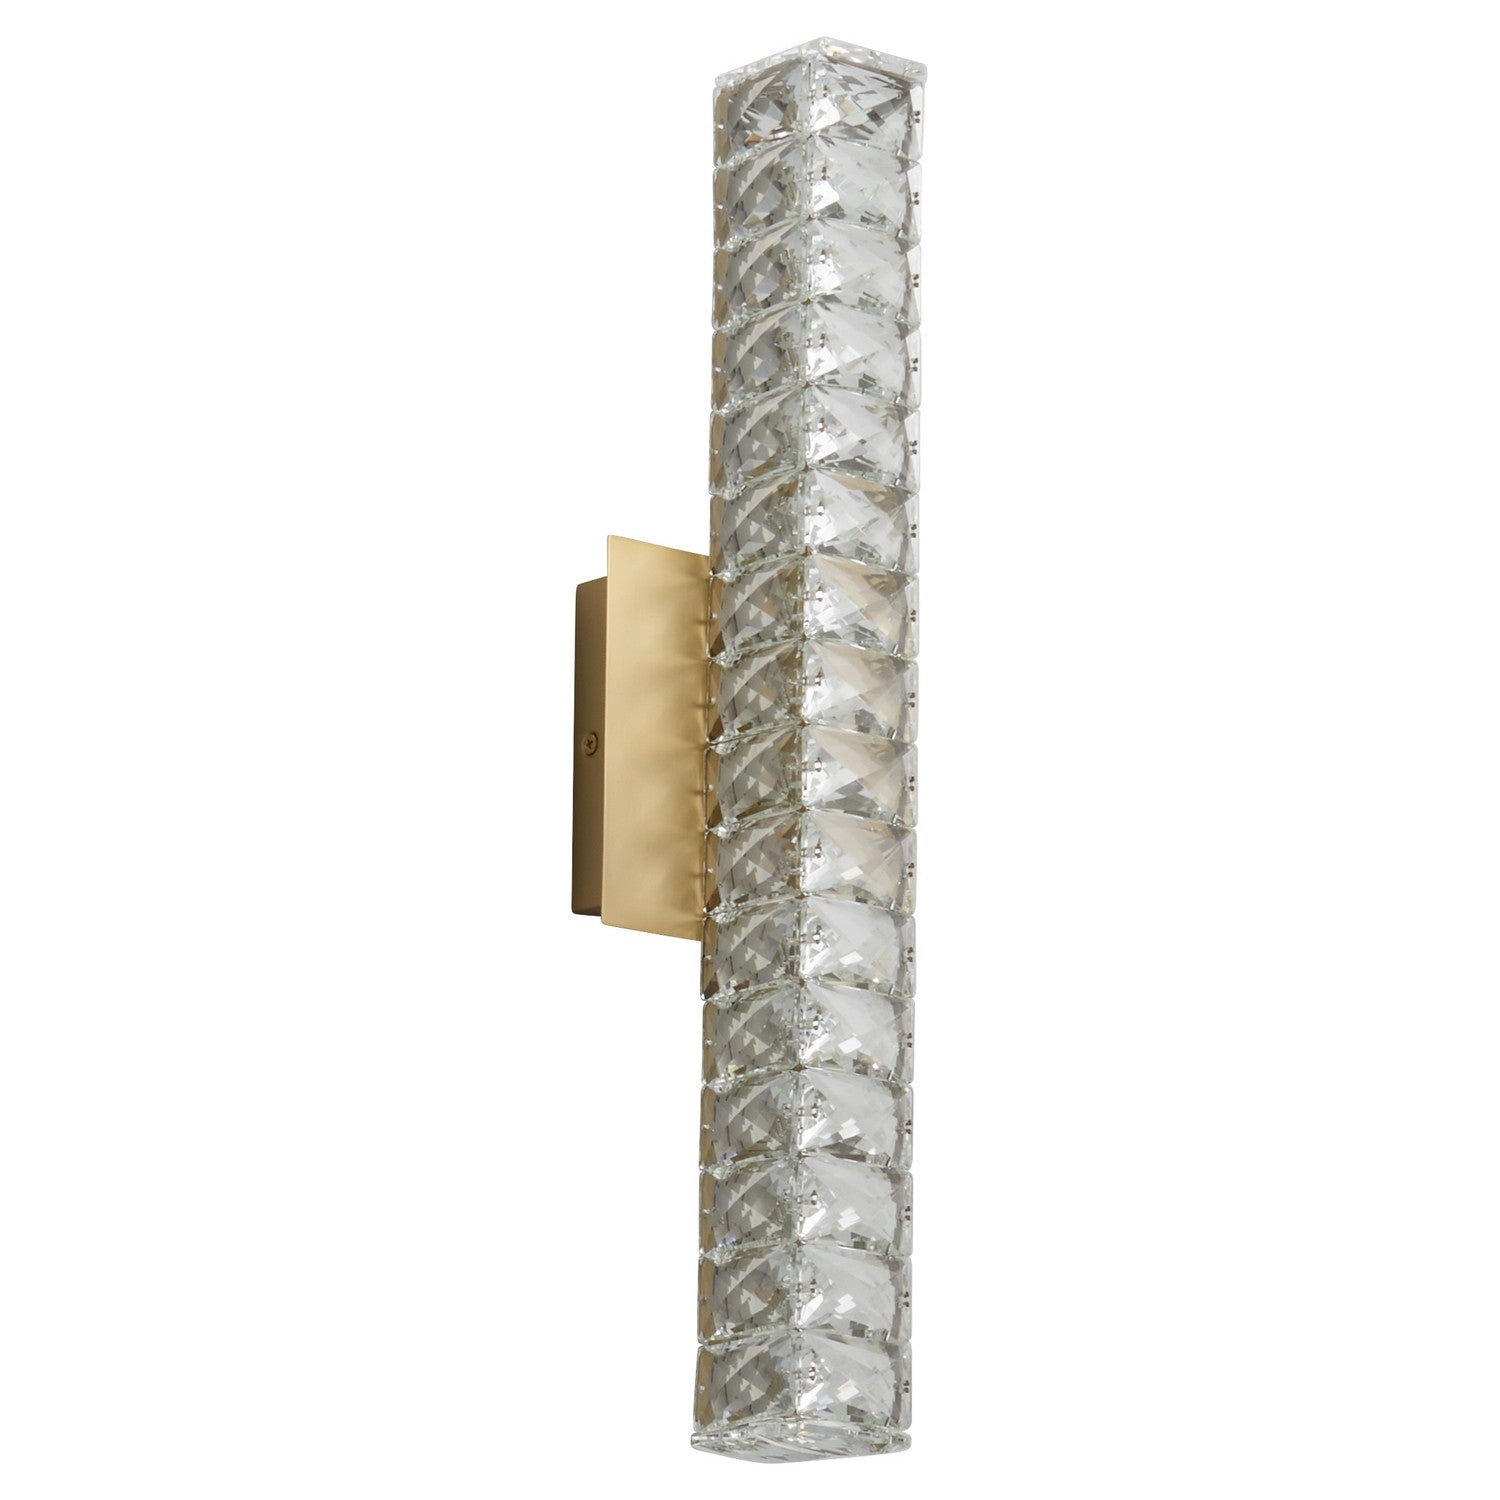 Oxygen Elan 3-573-40 Modern Vanity LED Wall Light Fixture- Aged Brass